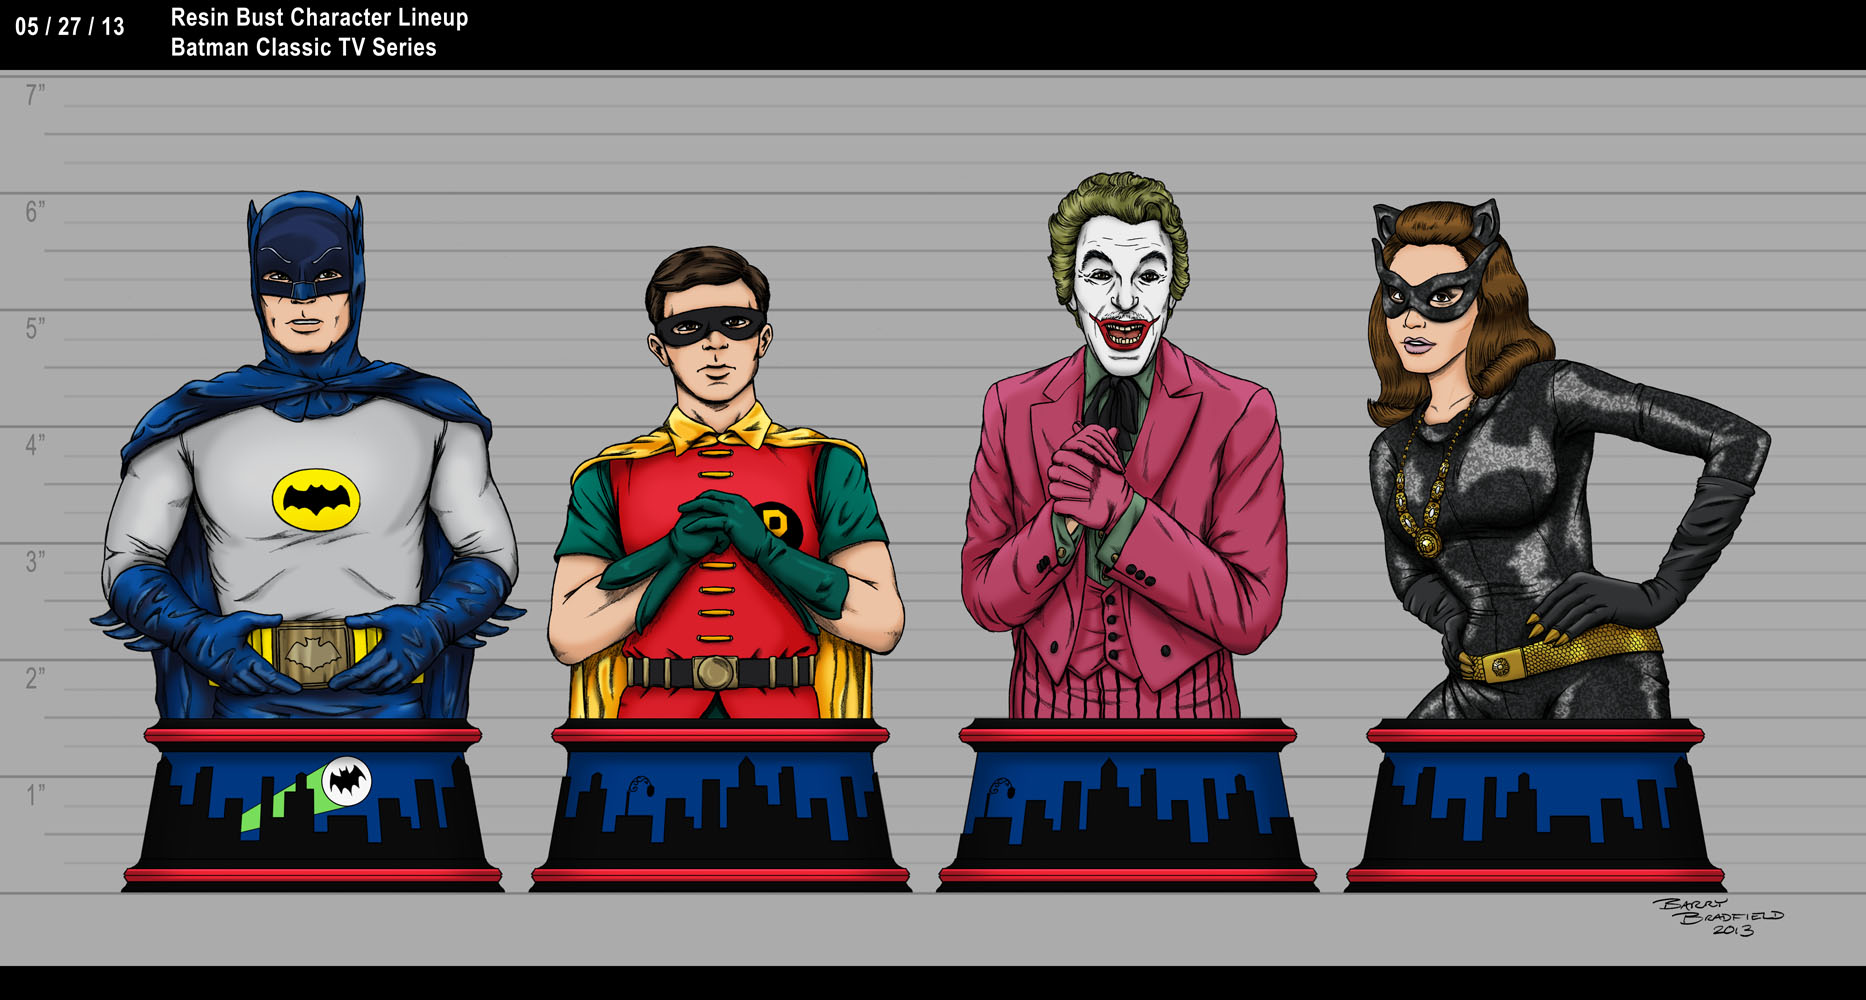 Batman Classic TV Series - Batman Resin Bust Character Lineup